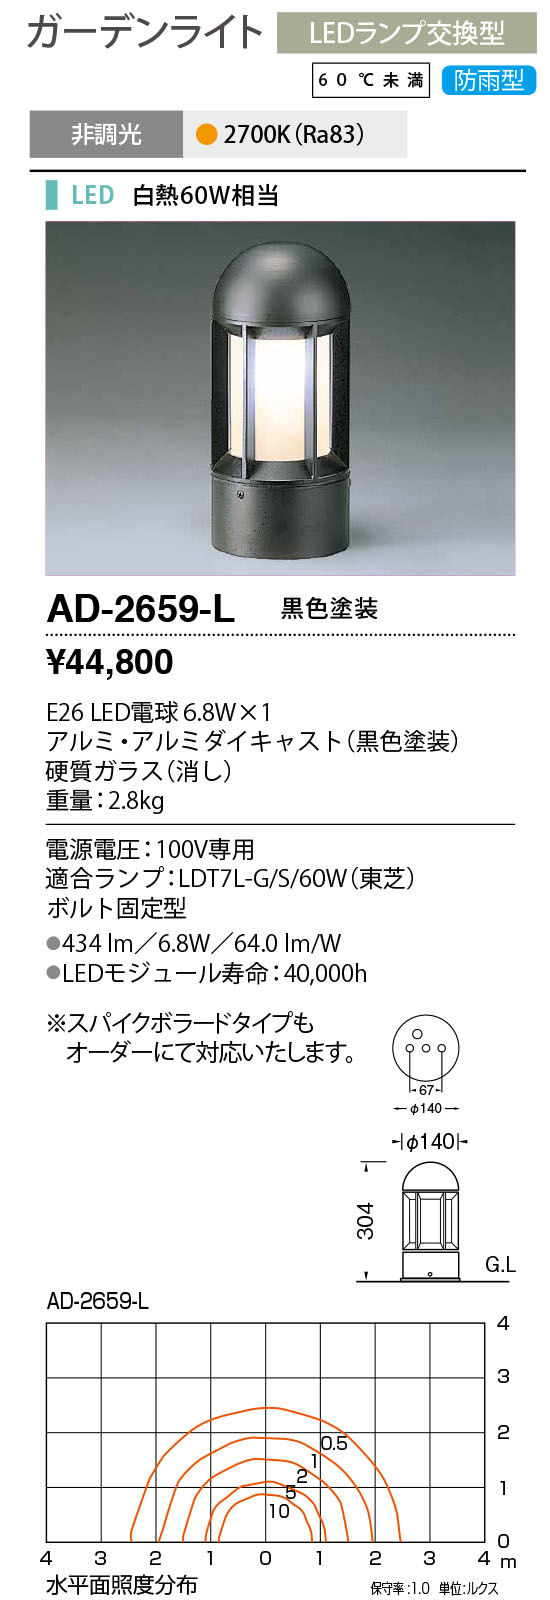 AD-2659-L(山田照明) 商品詳細 ～ 照明器具・換気扇他、電設資材販売のブライト